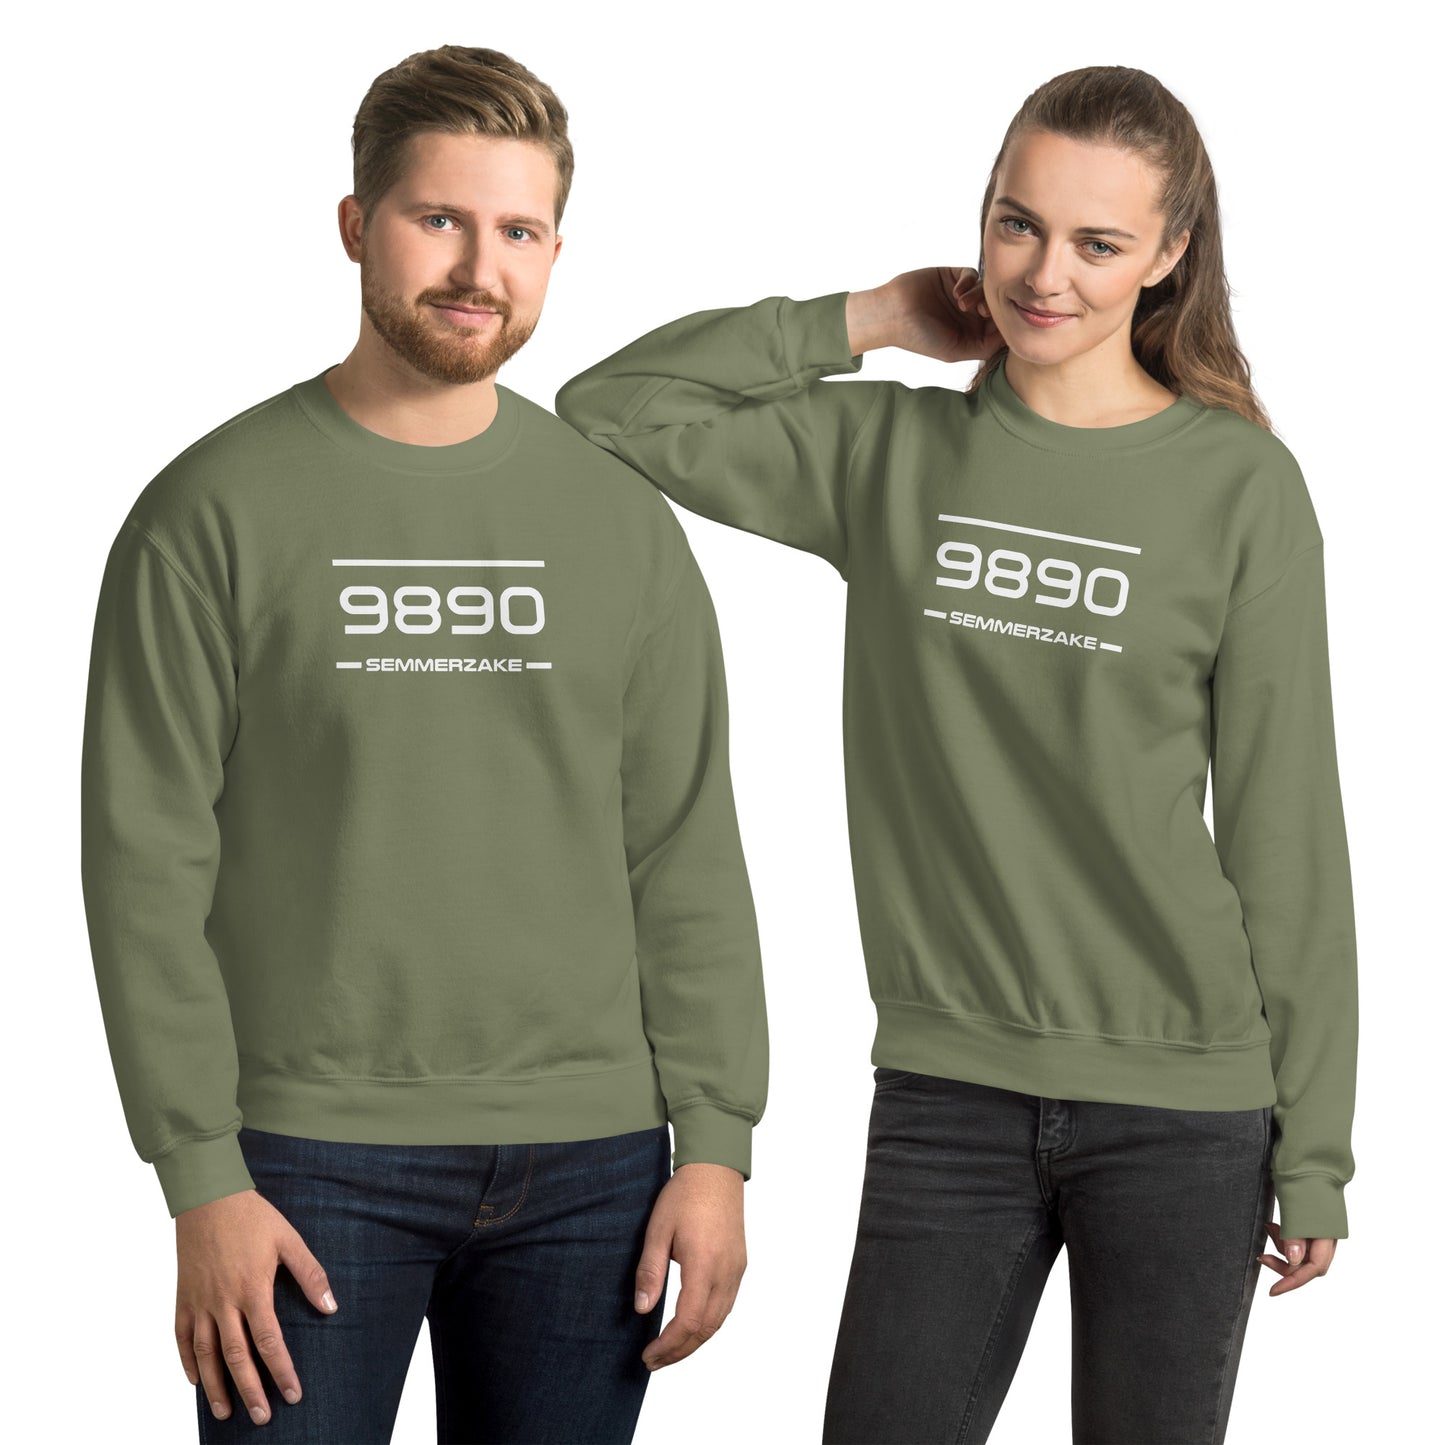 Sweater - 9890 - Semmerzake (M/V)